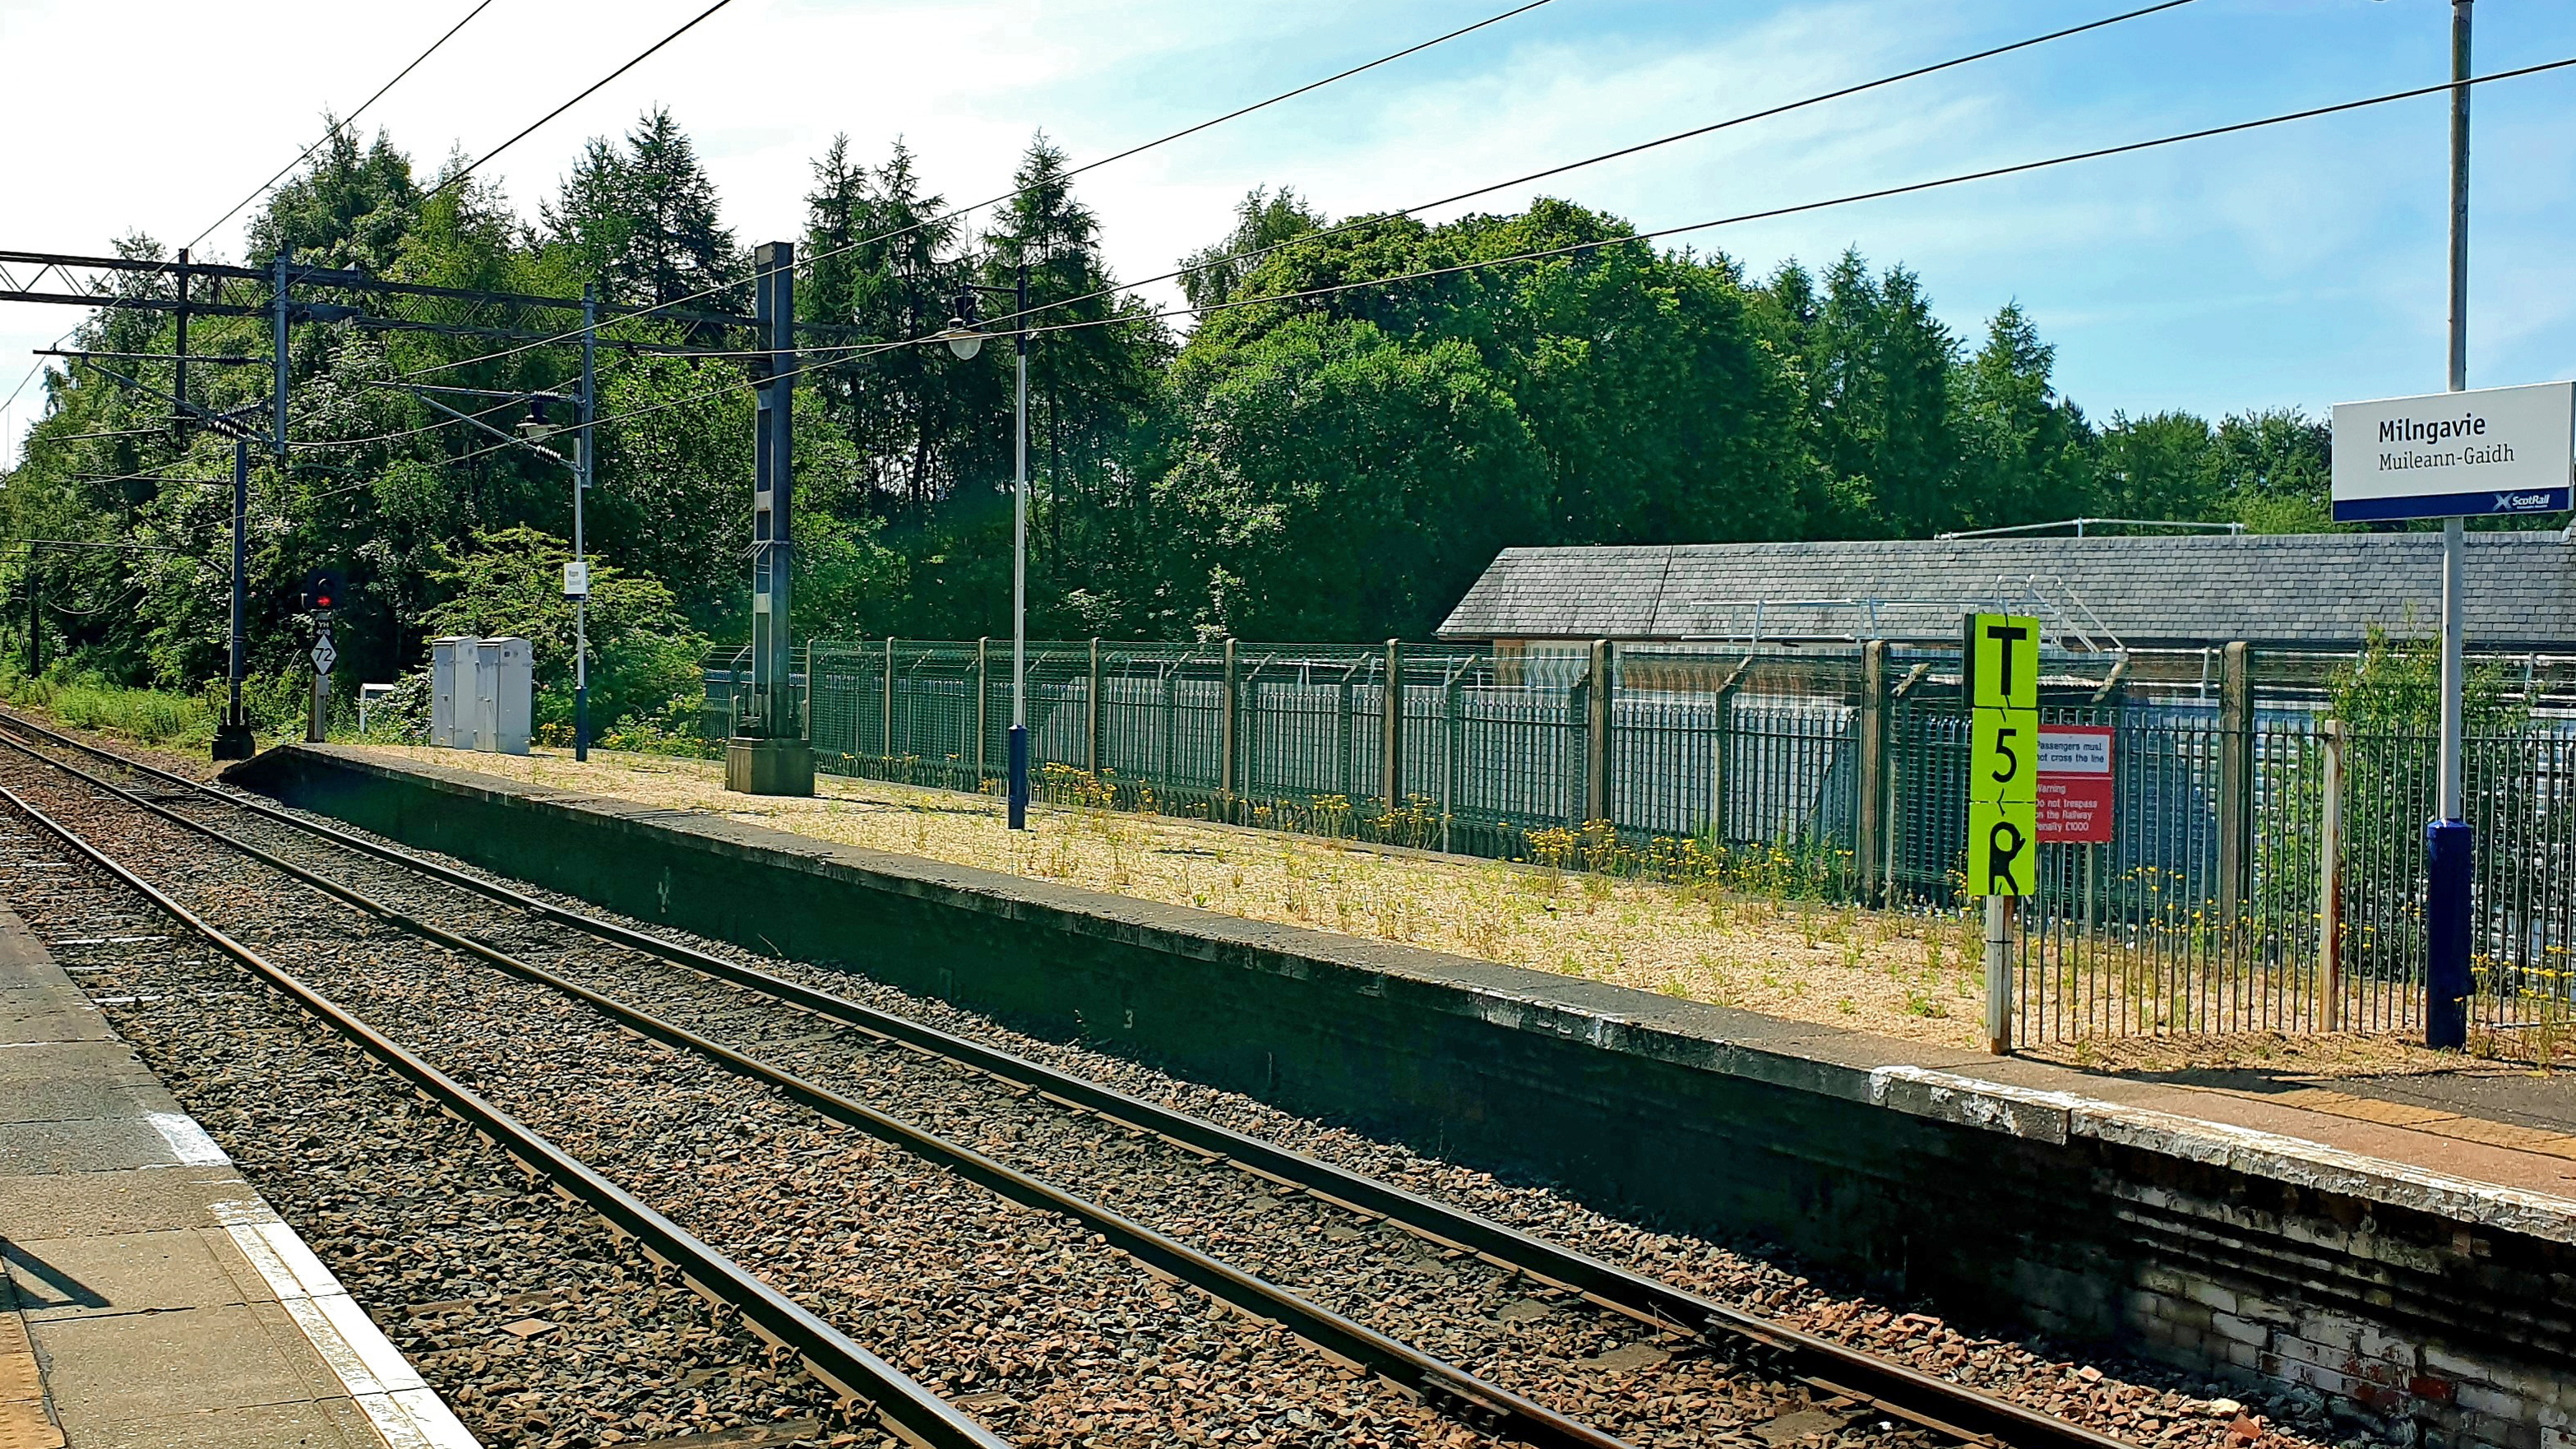 Milngavie station set for £5m platform improvements